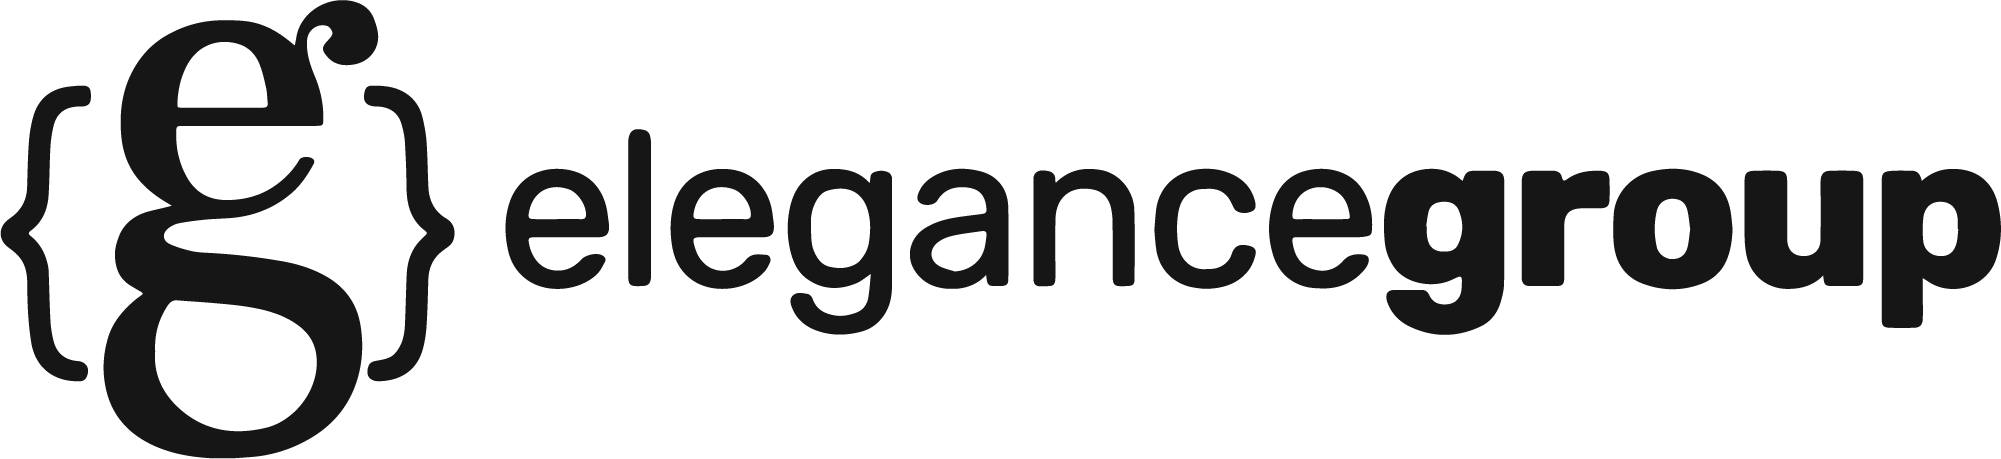 Elegance Group logo